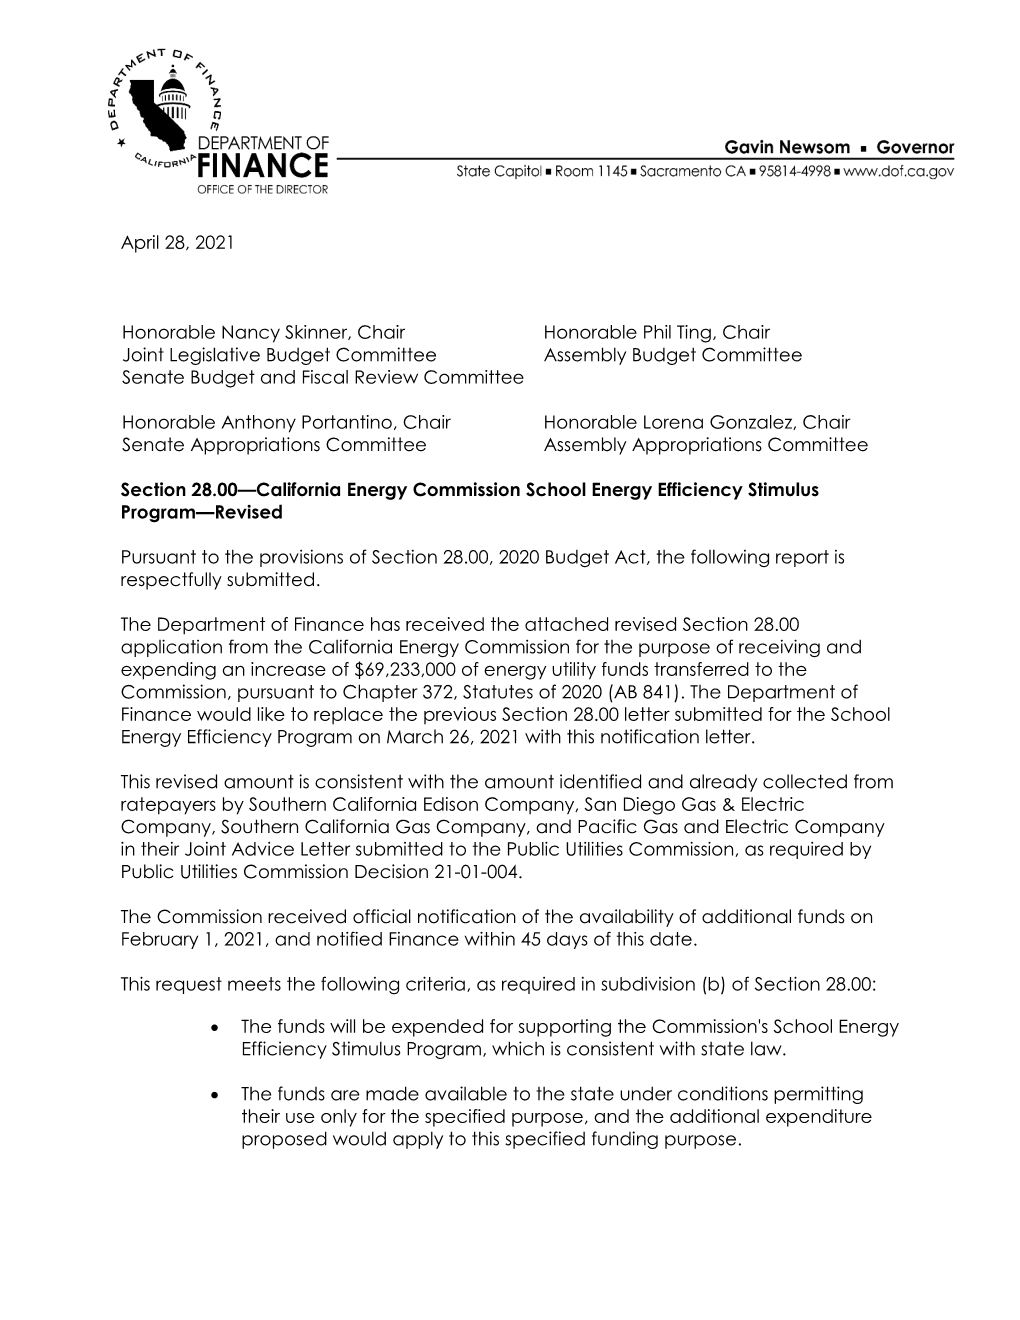 School Energy Efficiency Stimulus Program—Revised